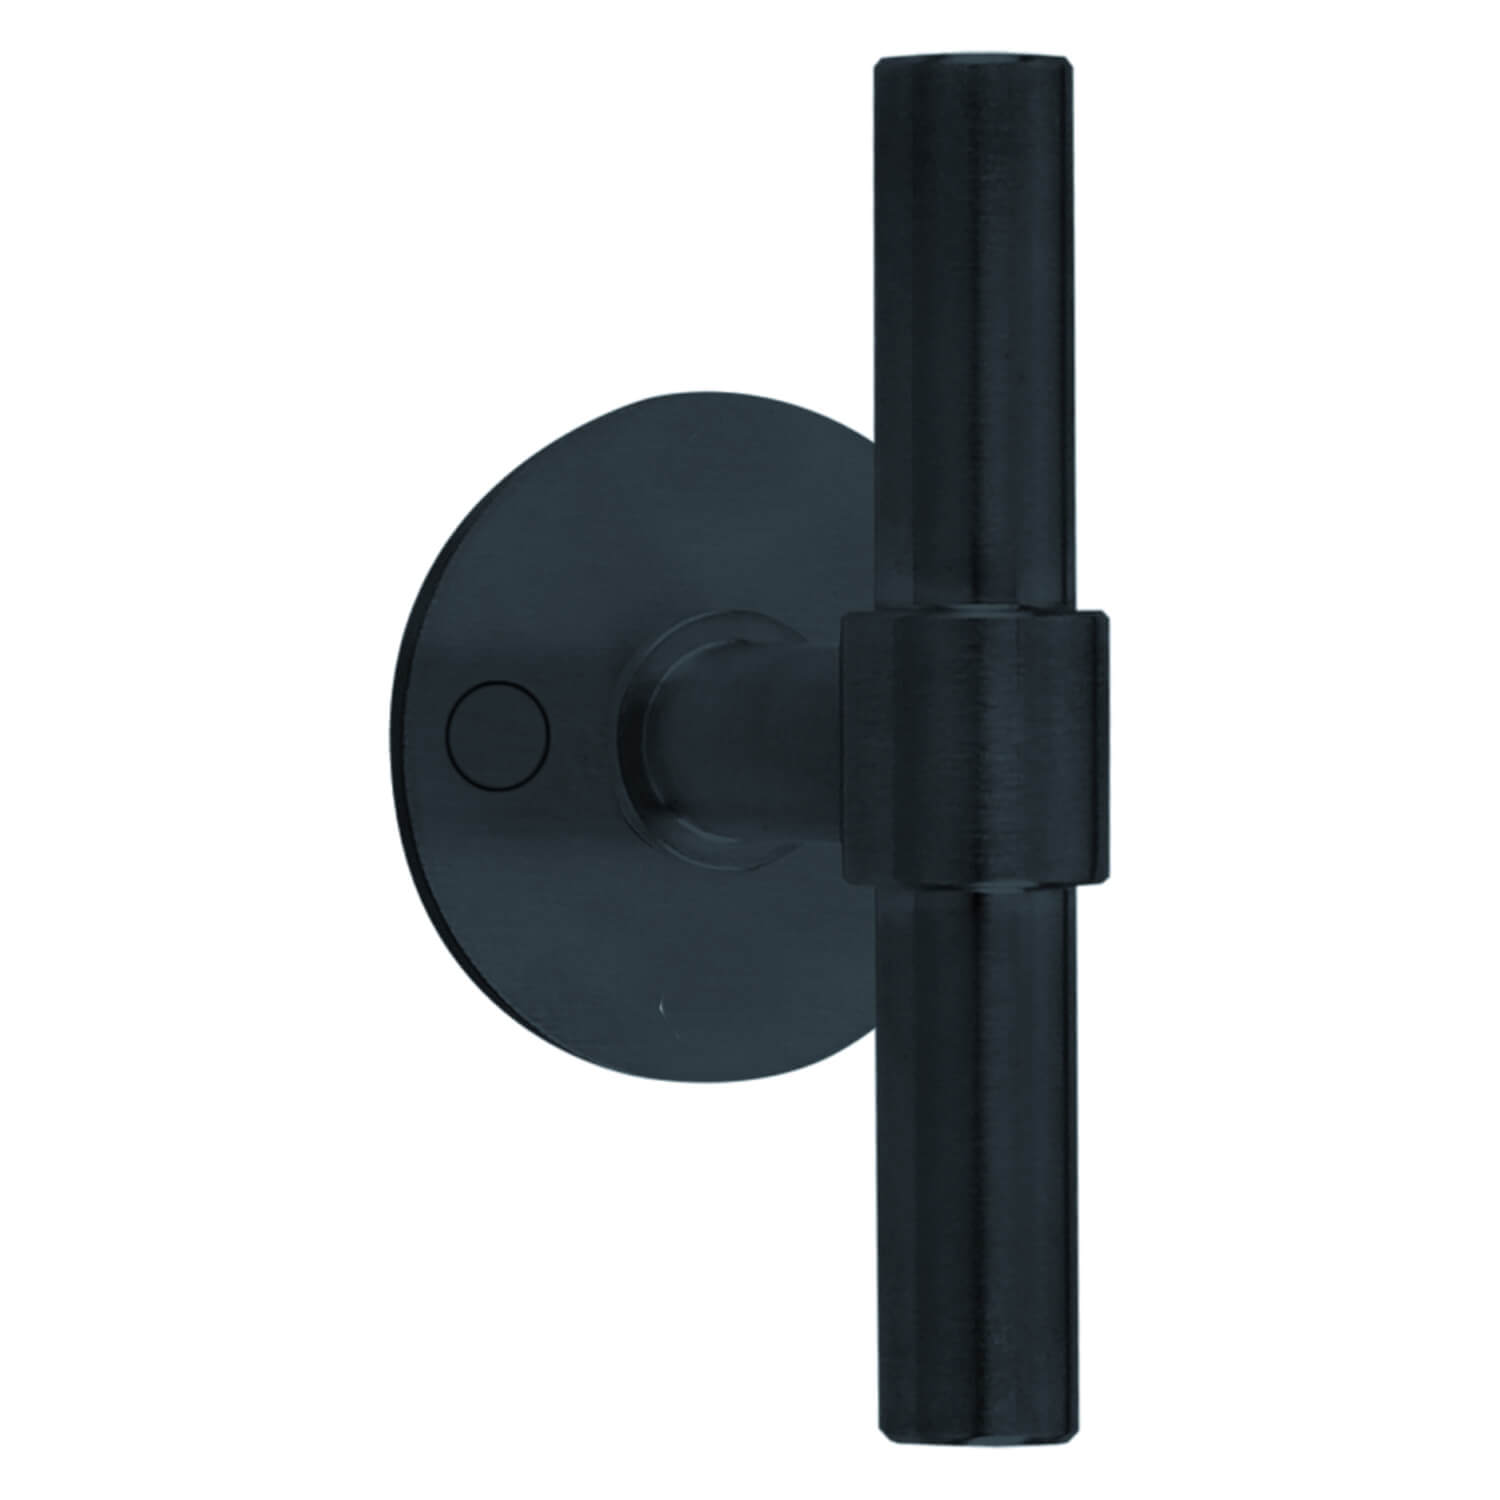 Formani Door handle - Satin black stainless steel - Model PBT15/50 -ONE ...